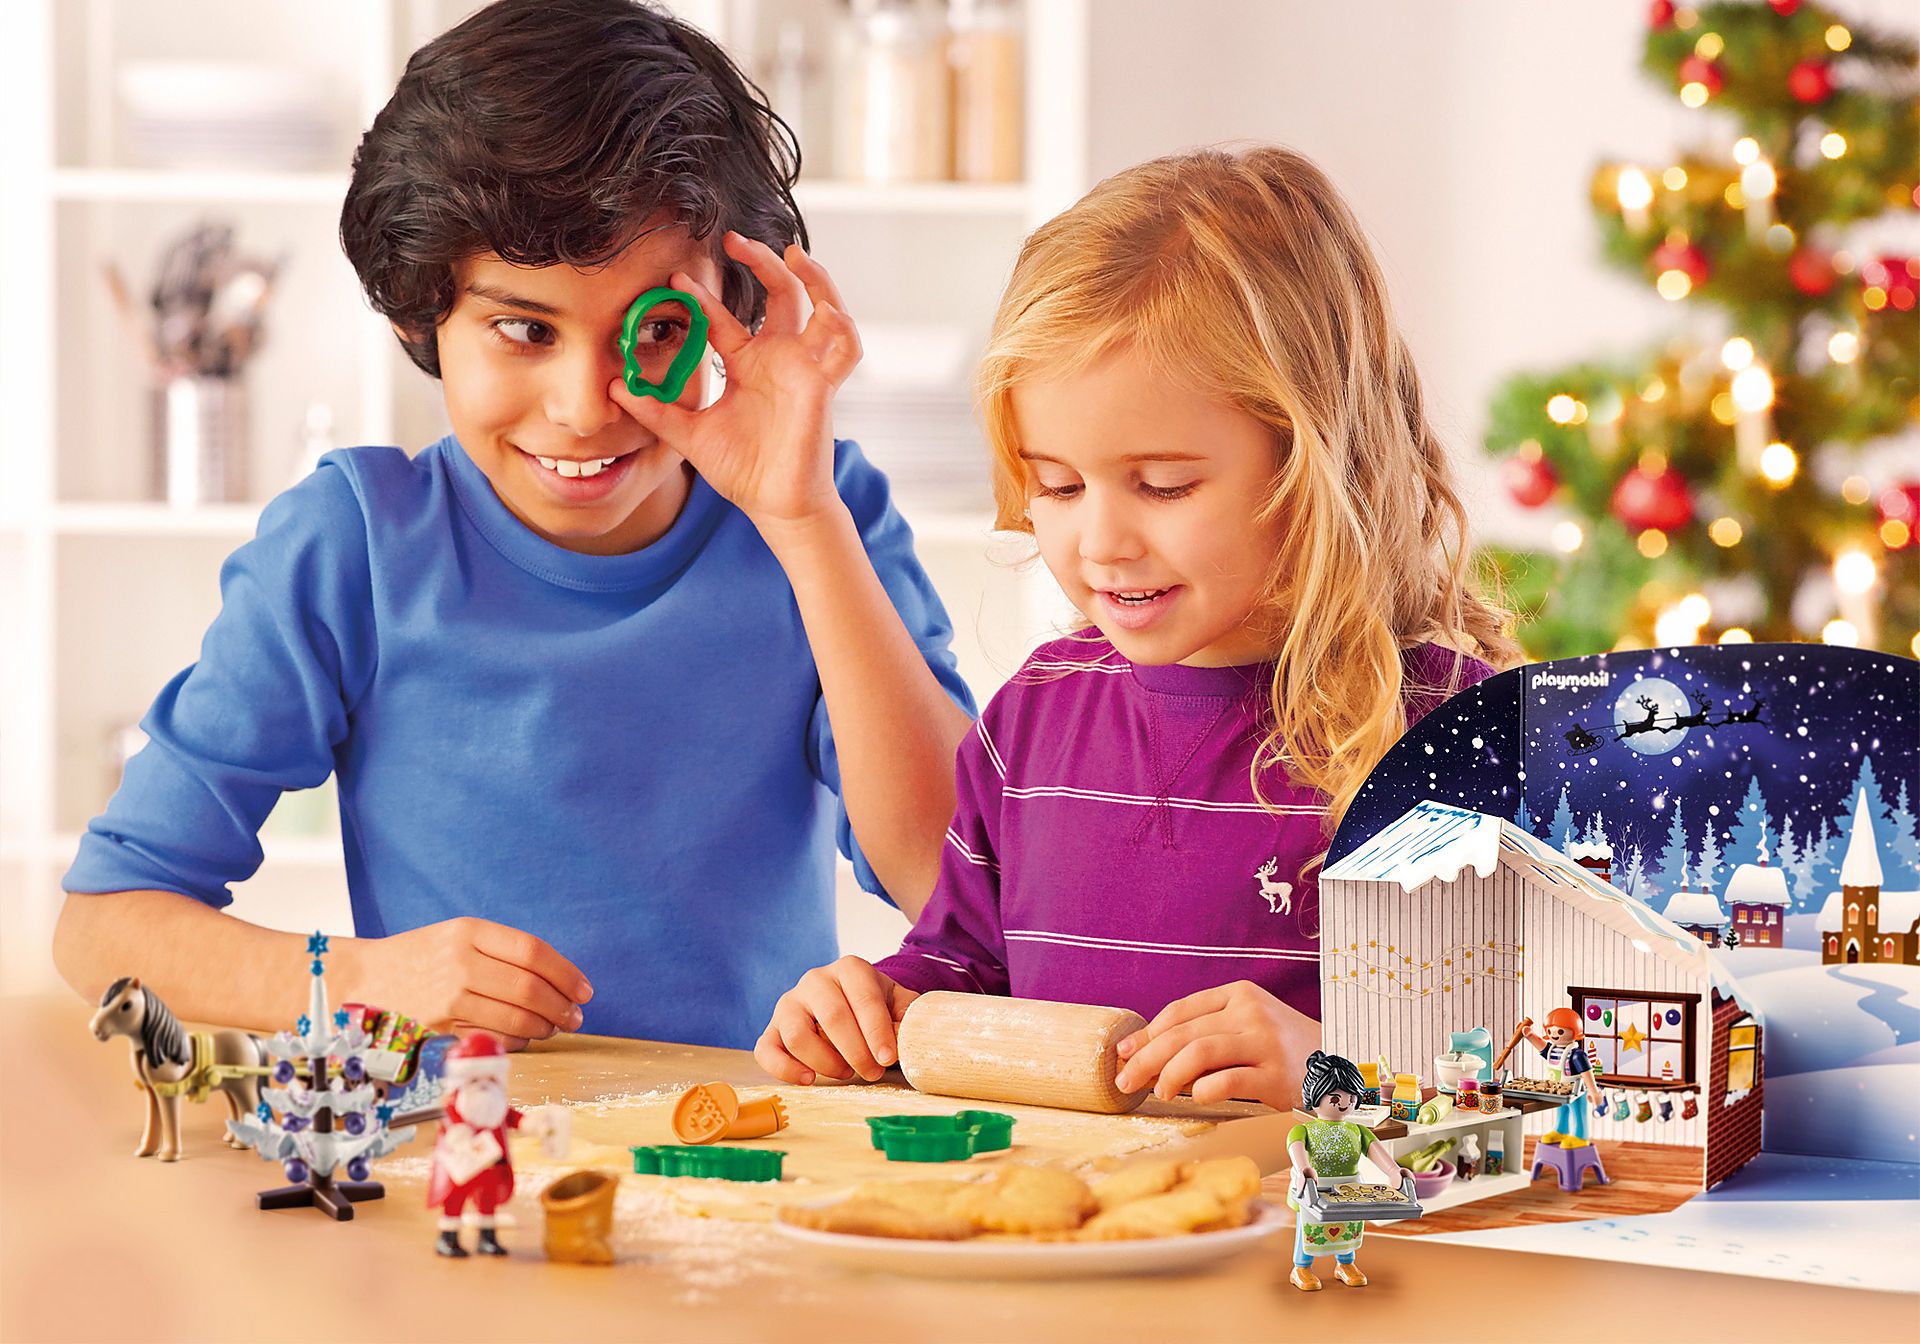 Playmobil Advent Calendar Christmas Bakery